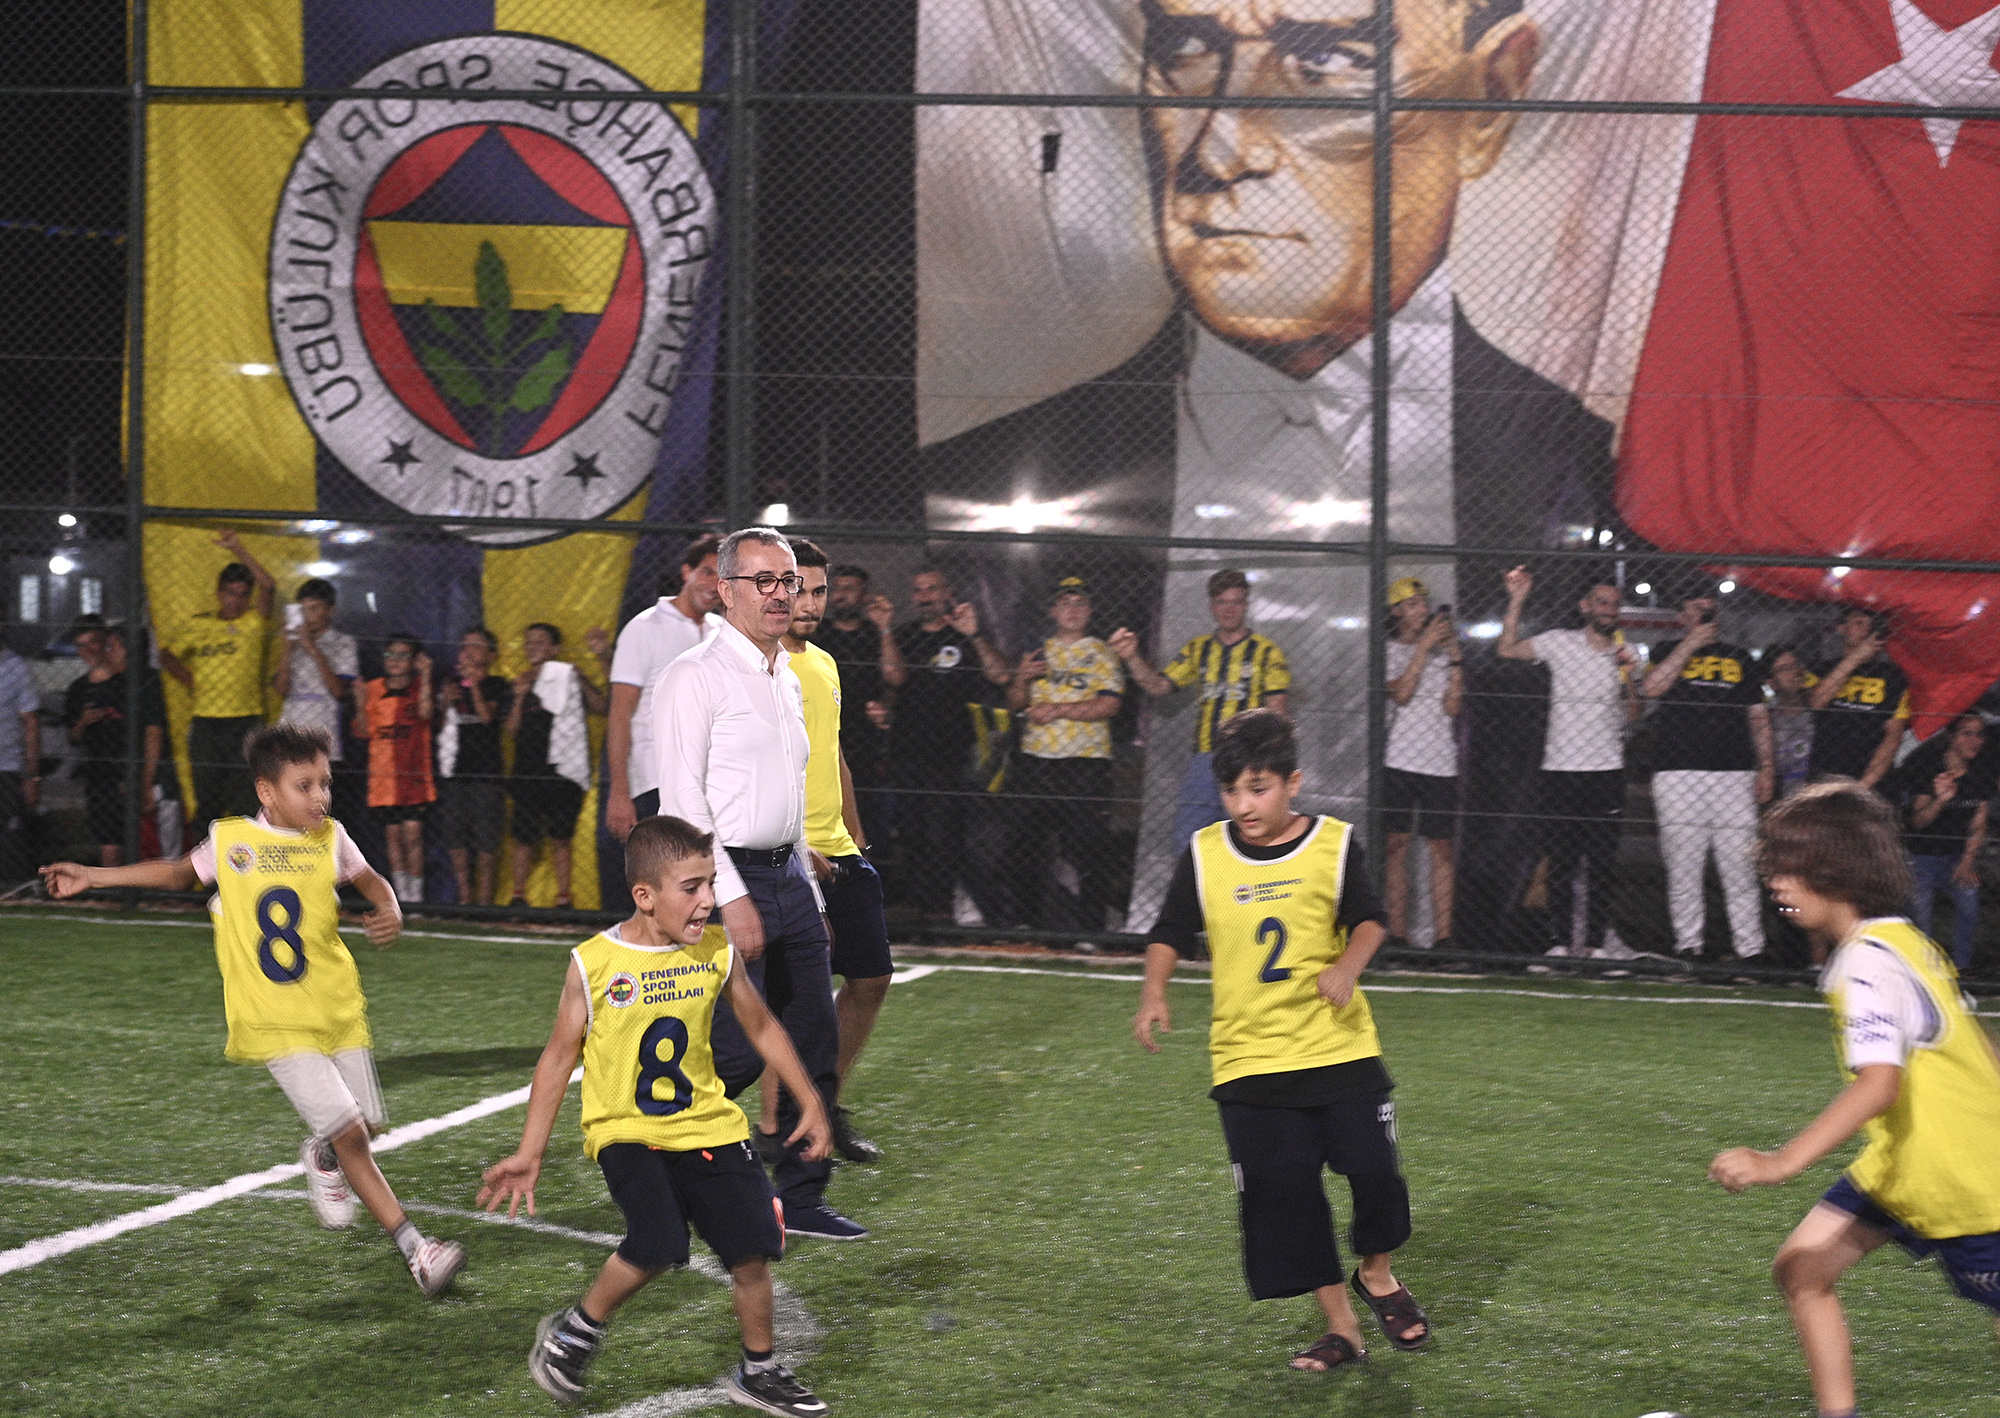 Fenerbahçe Konteyner Kenti, Umut Kent, Kahramanmaraş'ta Açıldı